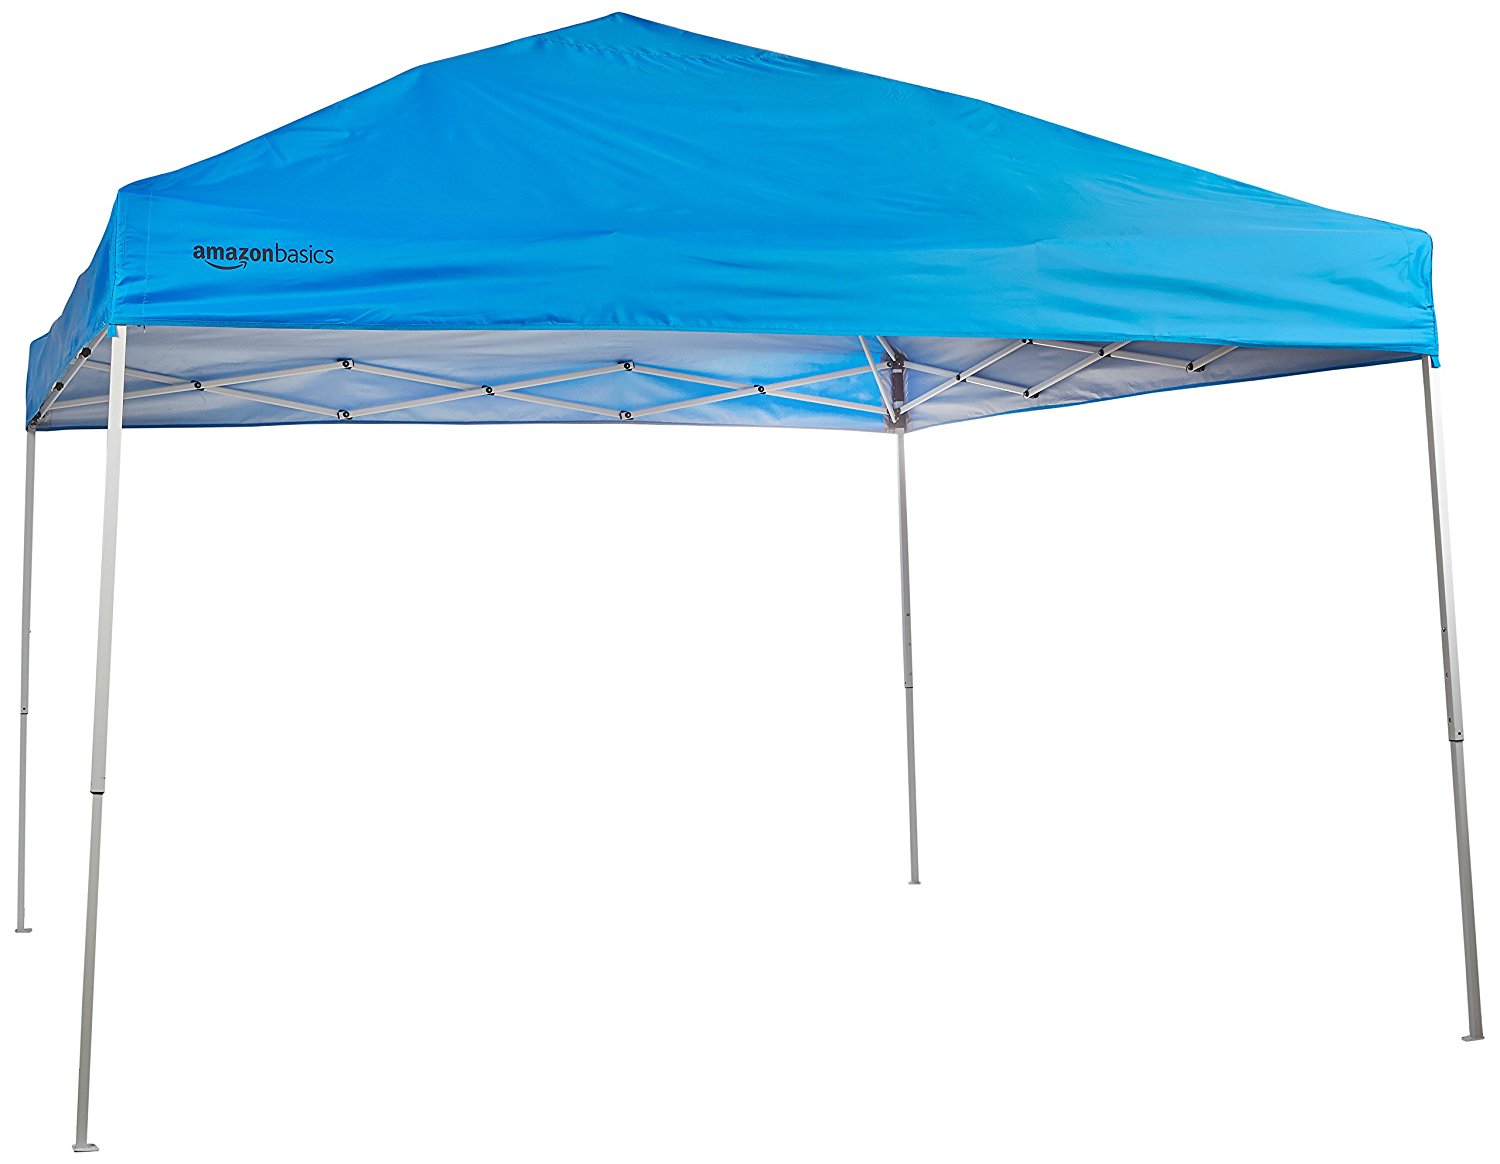 AmazonBasics 10 x 10 feet Pop-Up Canopy Tent